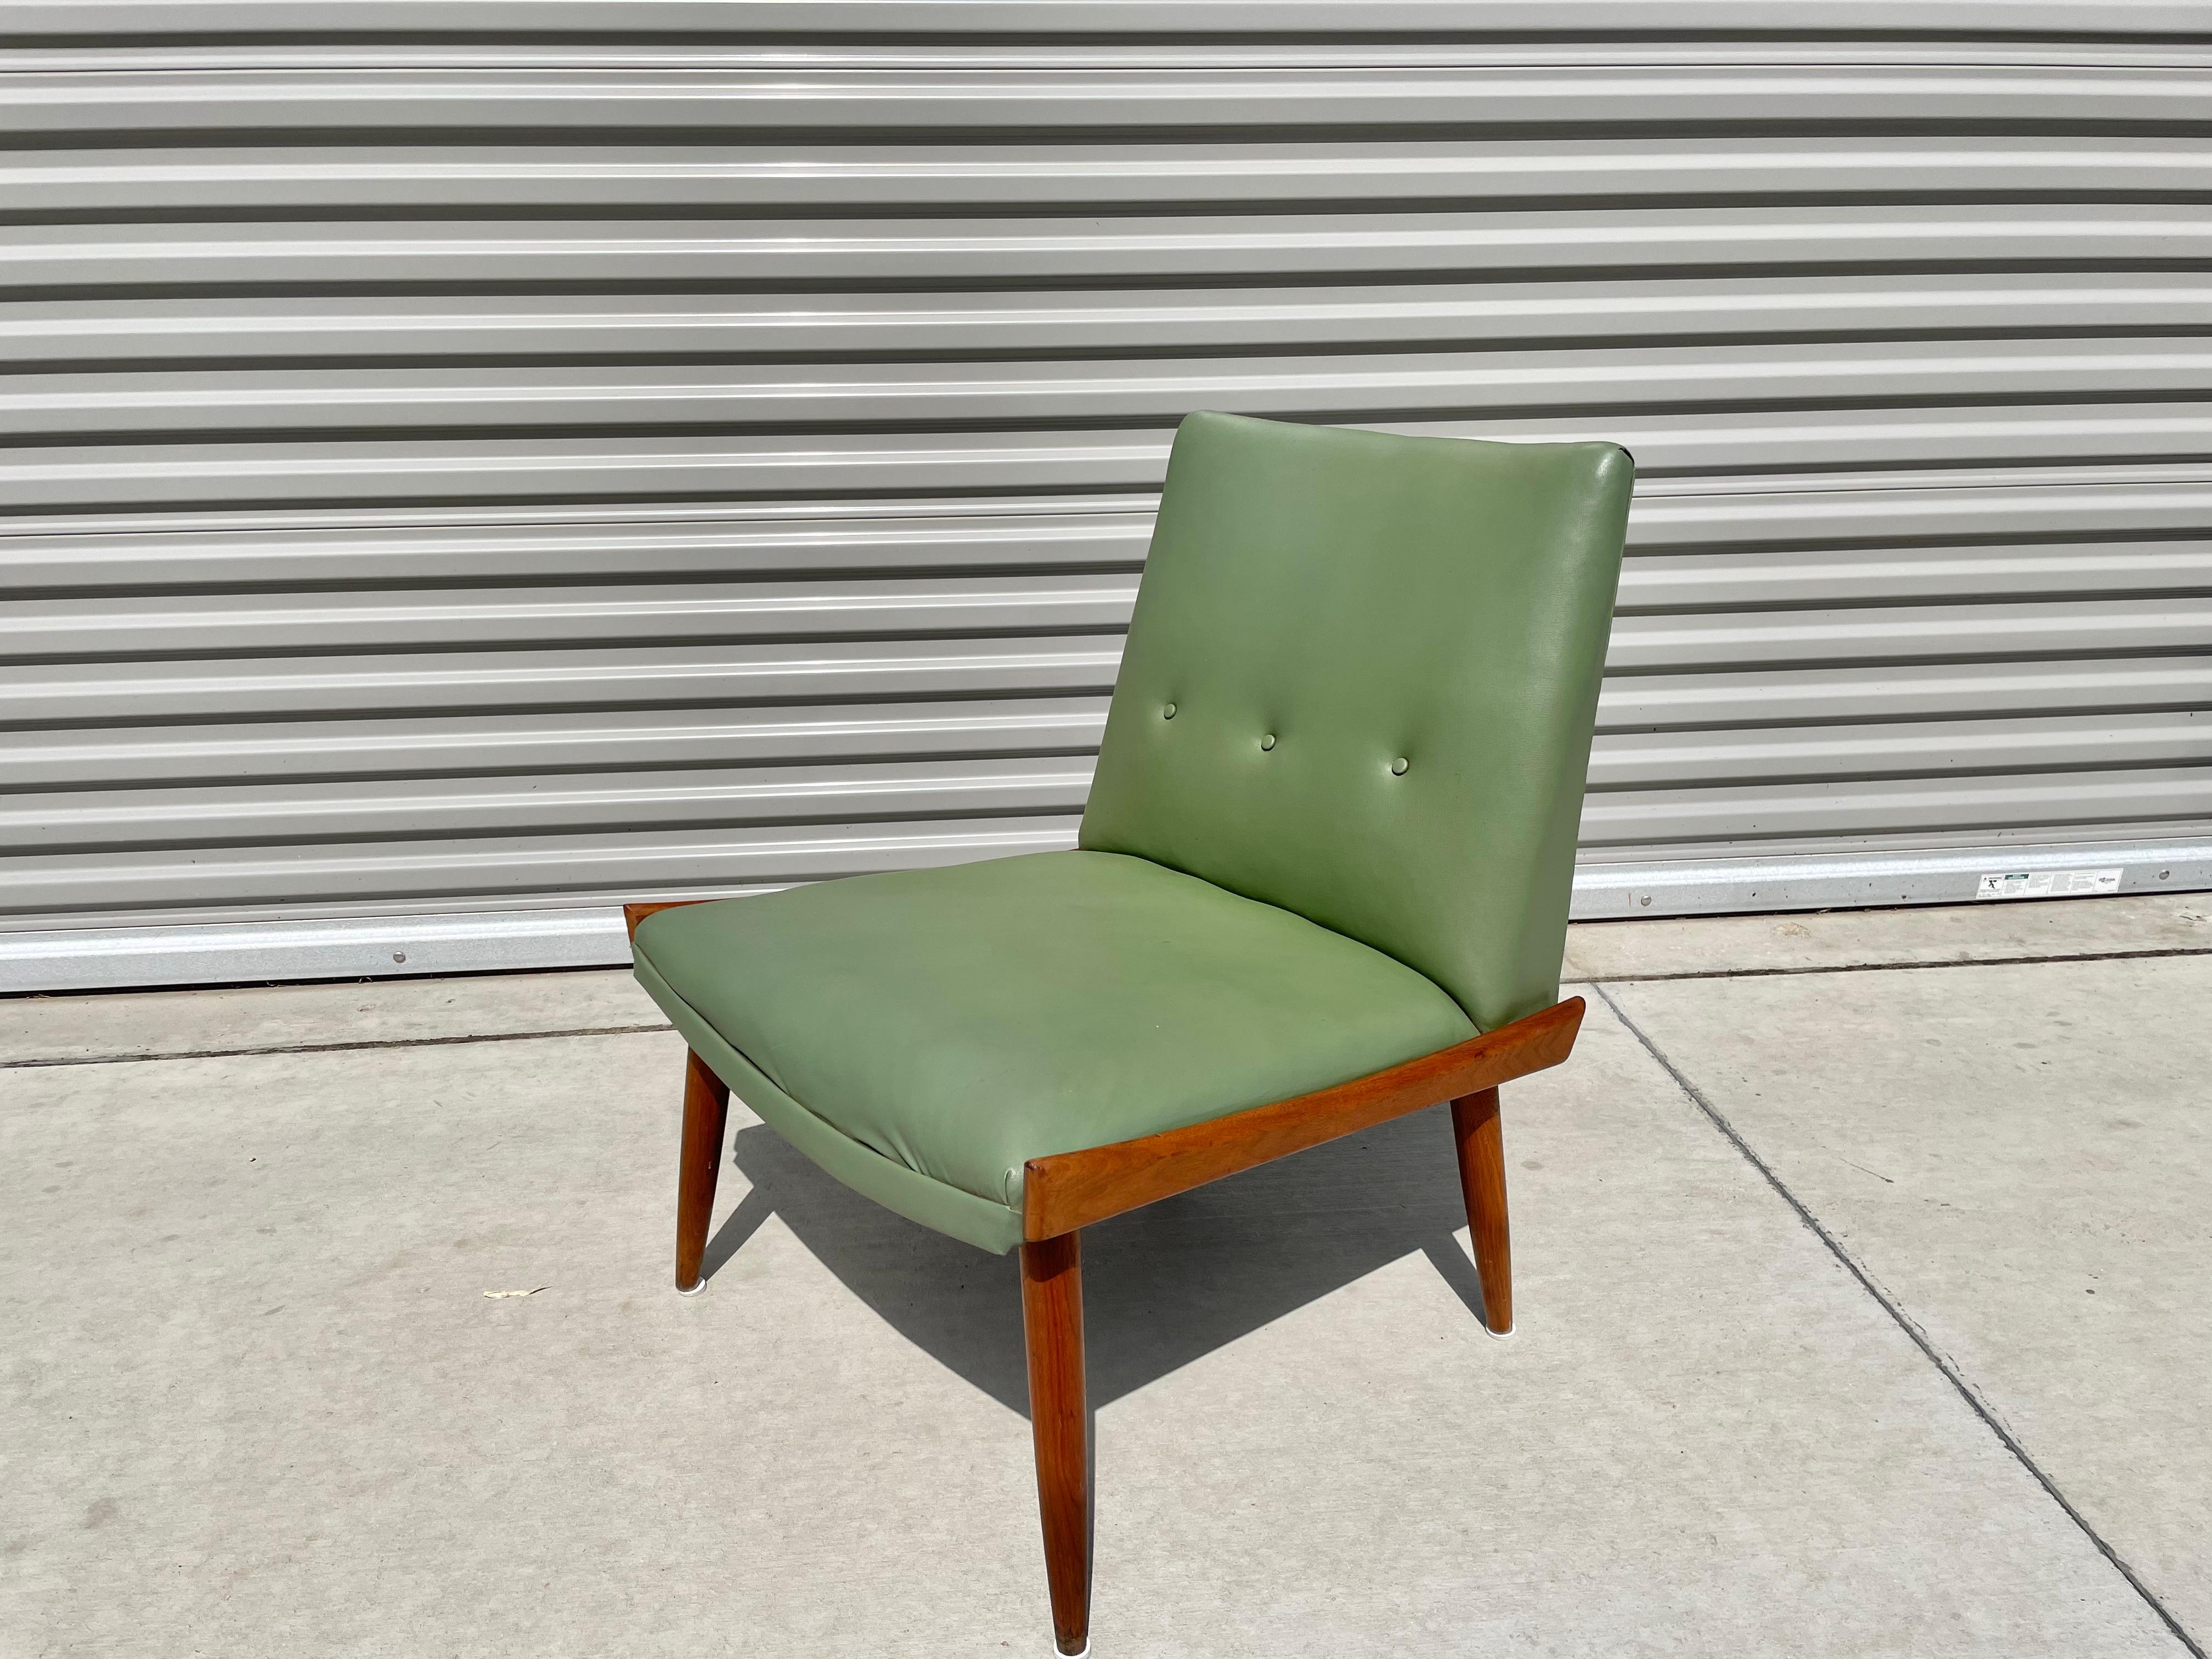 Midcentury Slipper Chairs by Kroehler Mfg Co. 1